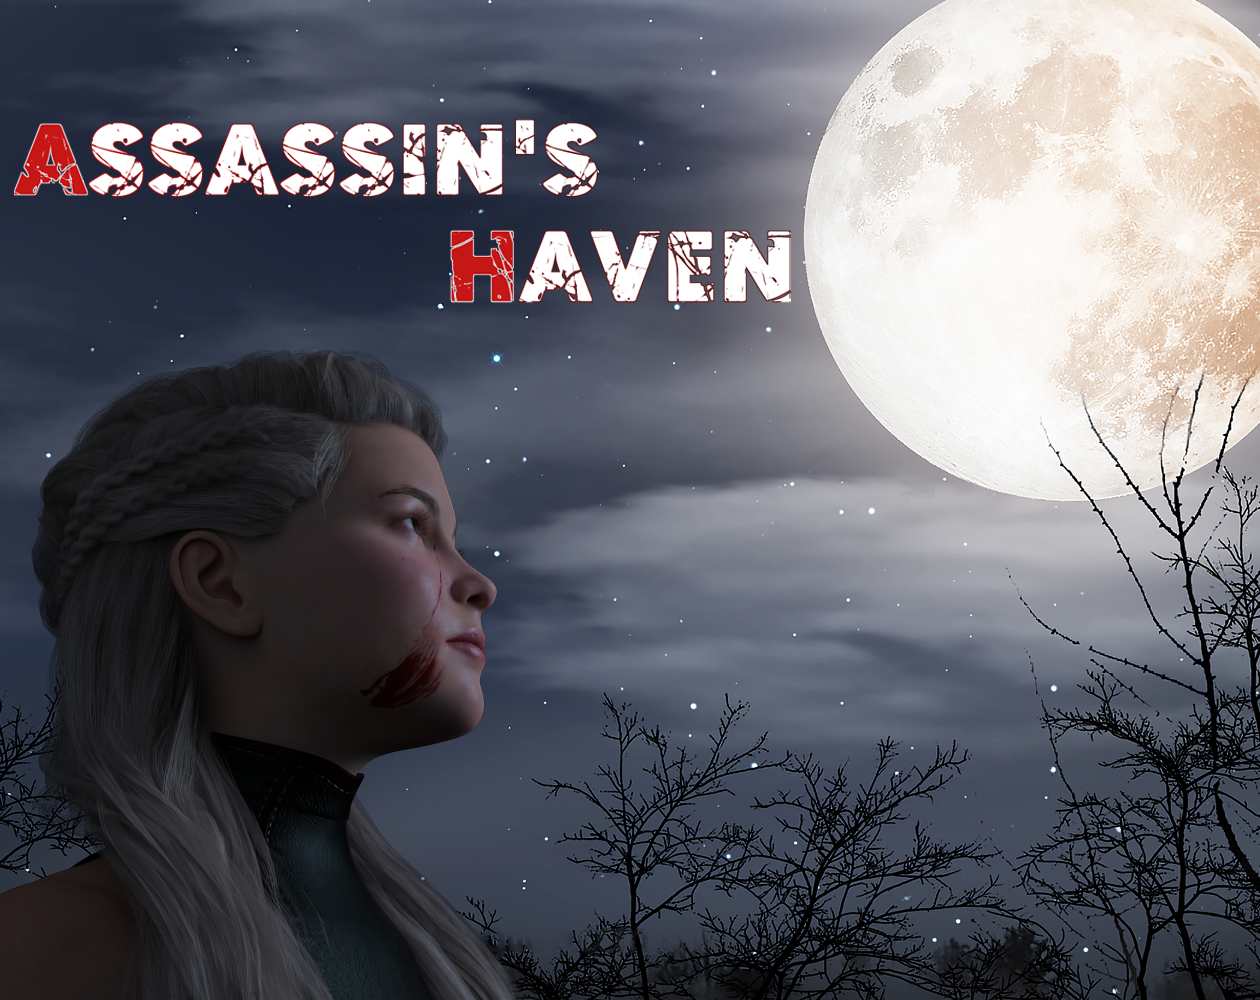 Assassin's Haven